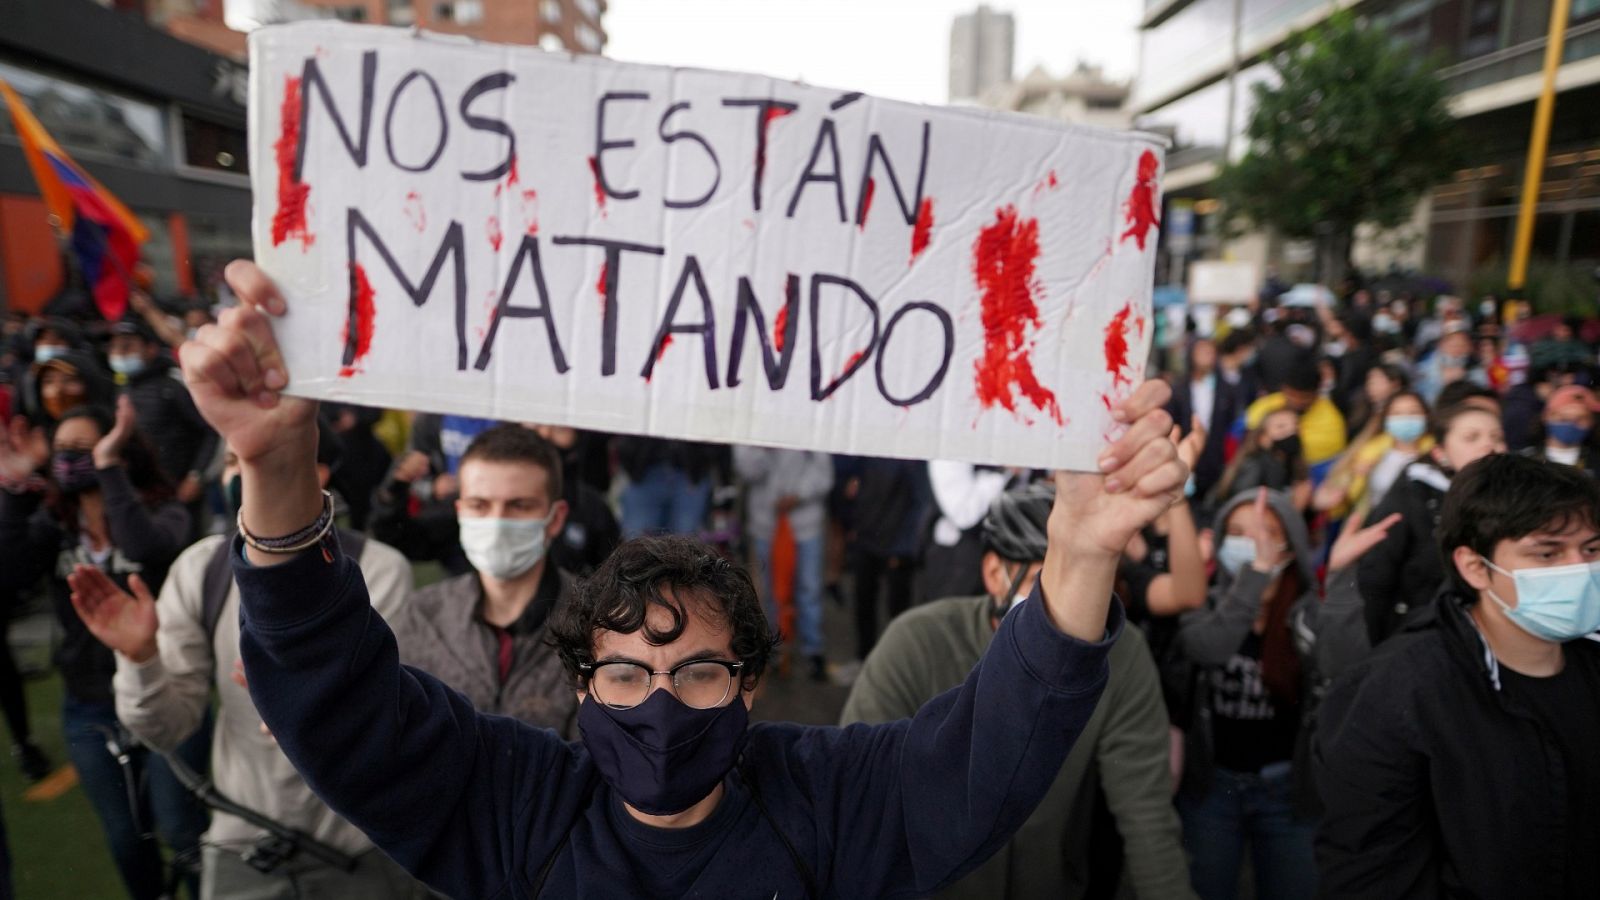 Un manifestante en Bogotá sostiene un cartel: "Nos están matando"